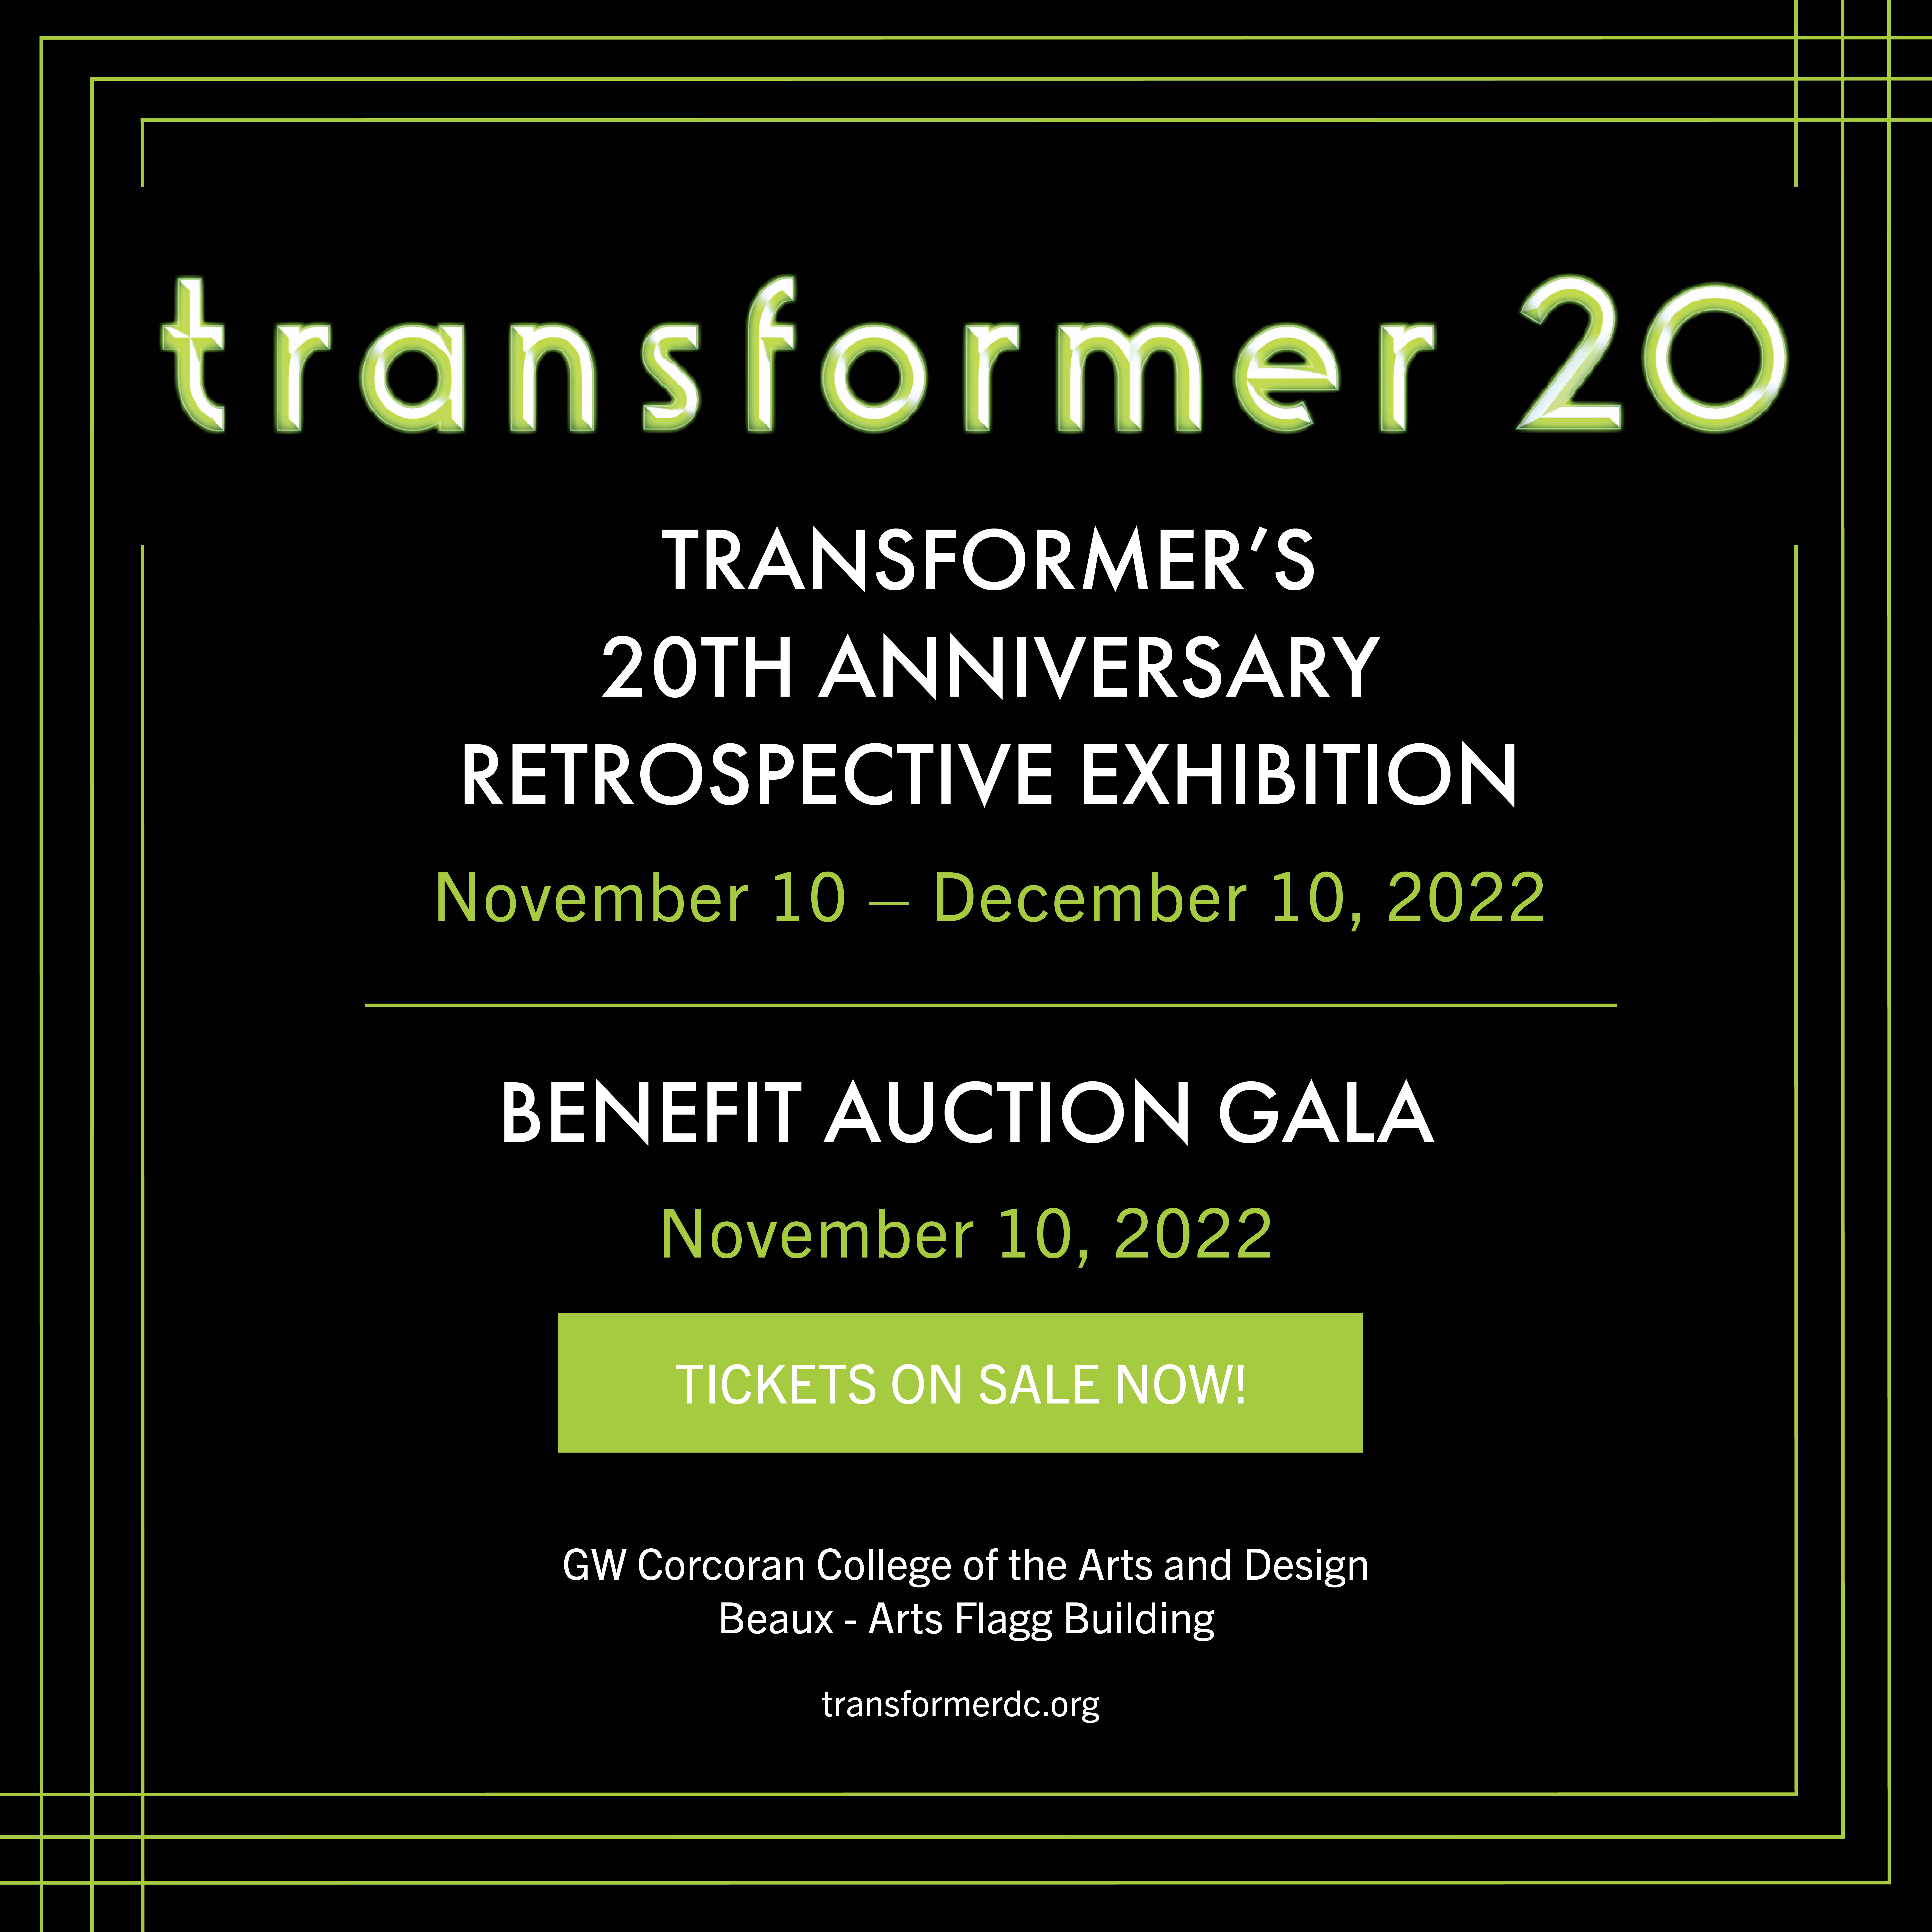 Transformer20 Retrospective Exhibition & Benefit Auction Gala